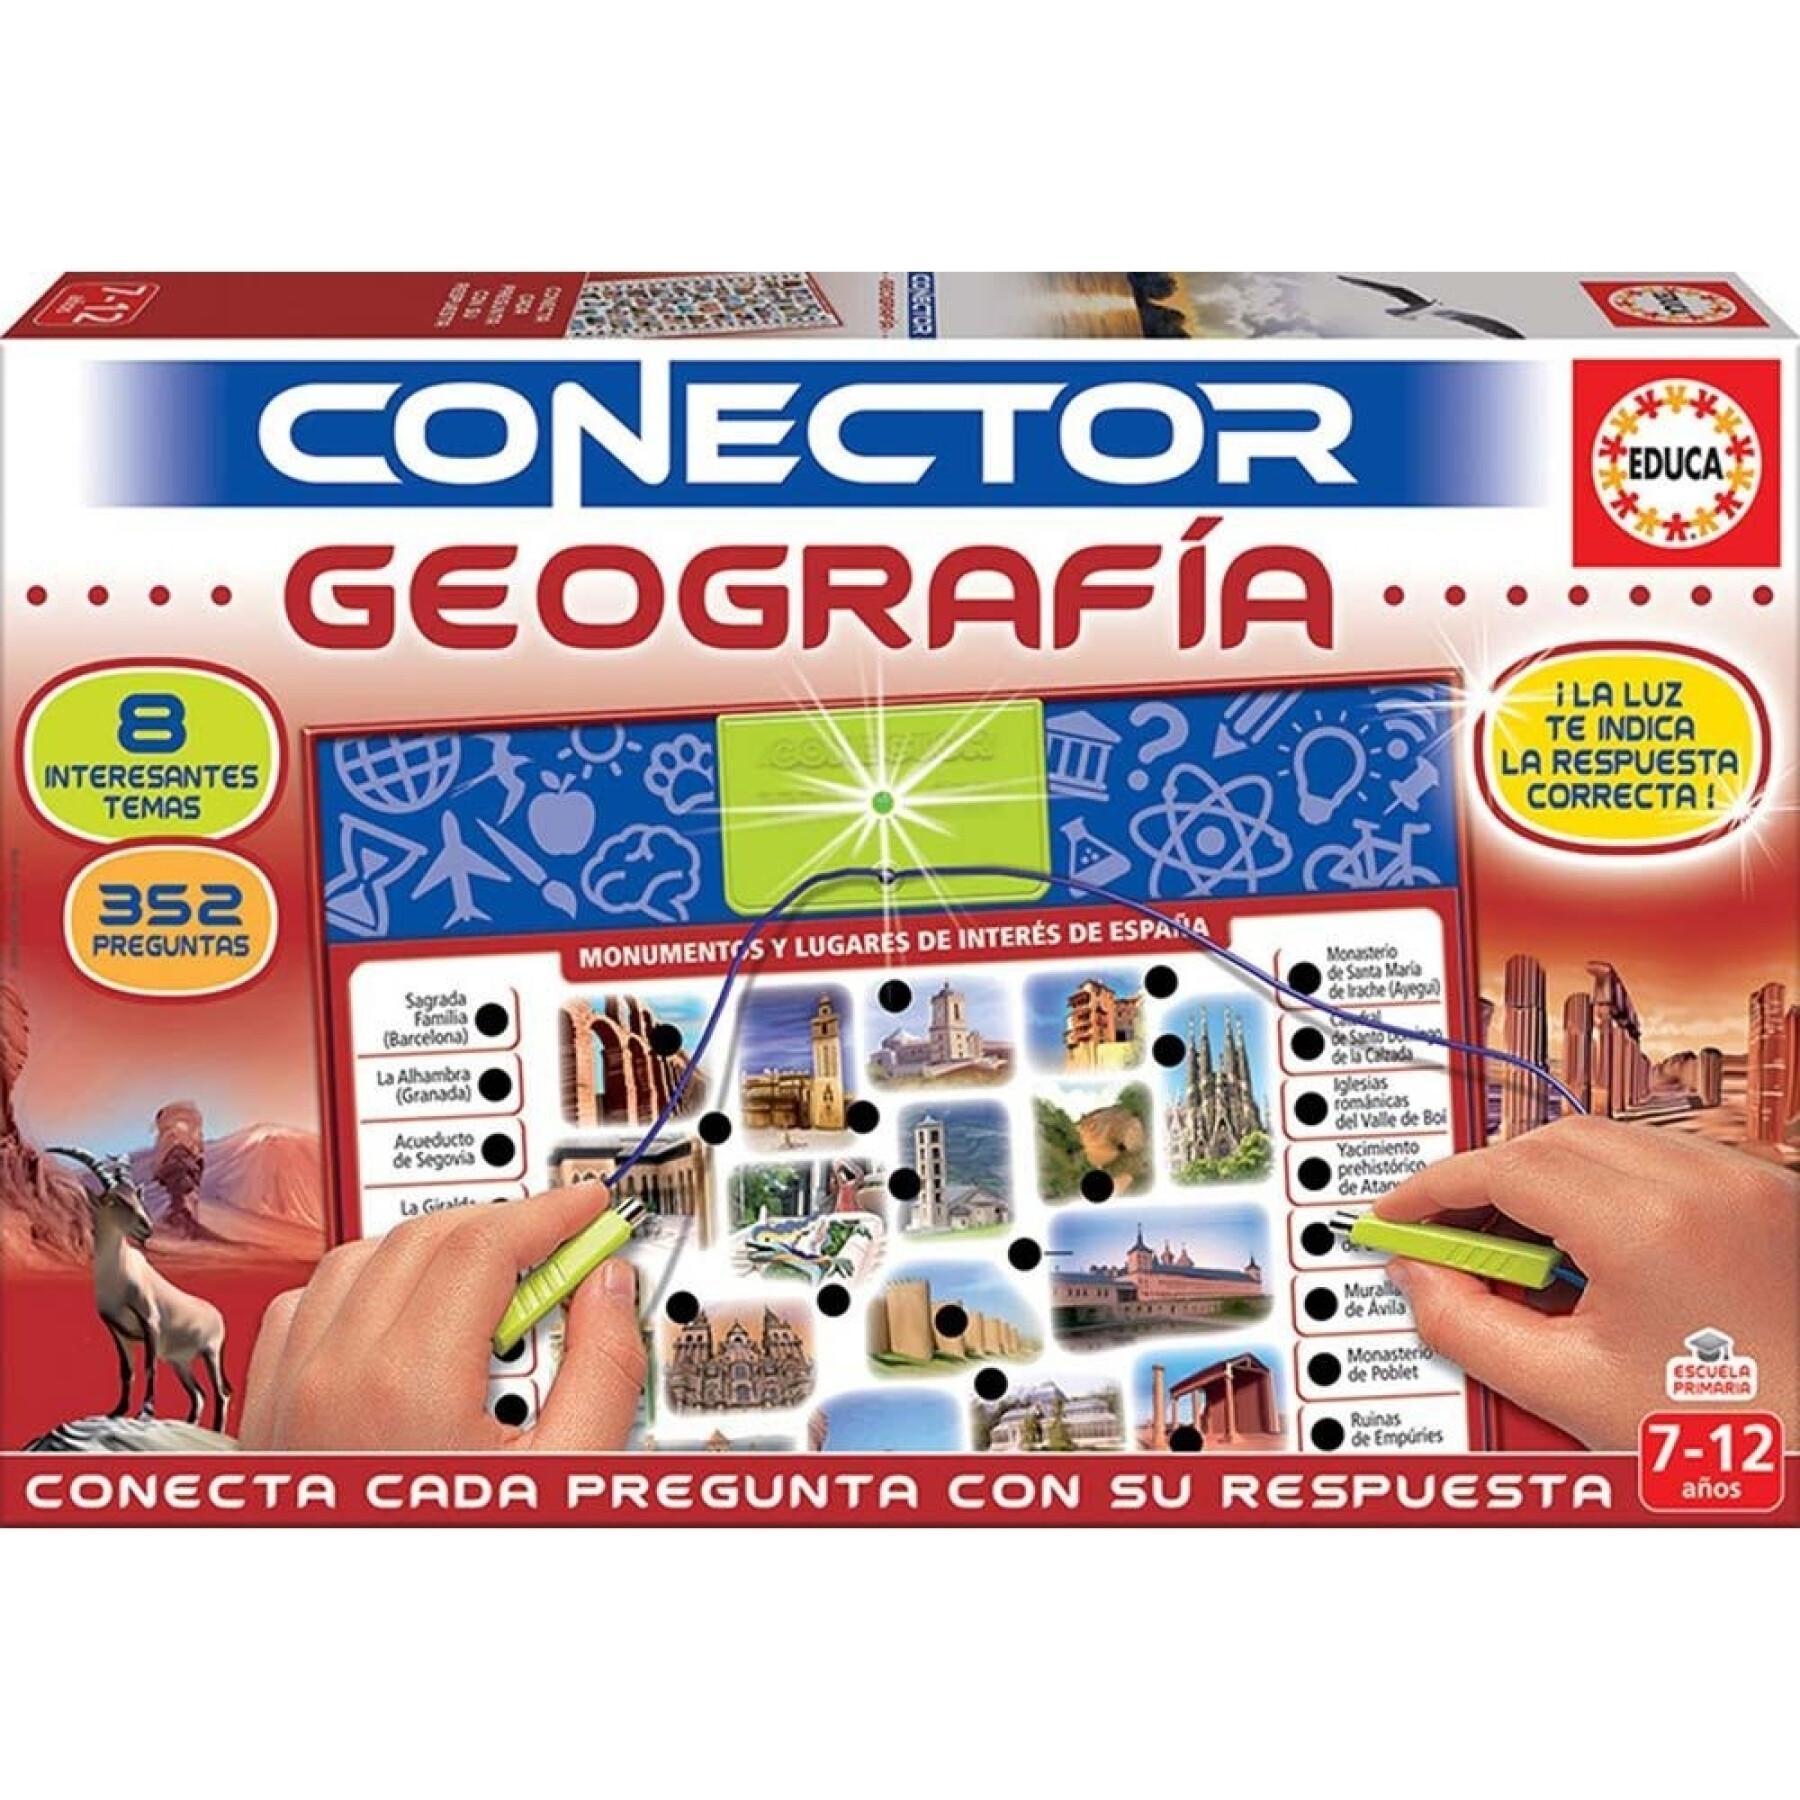 Geography educational tablet Educa Conector